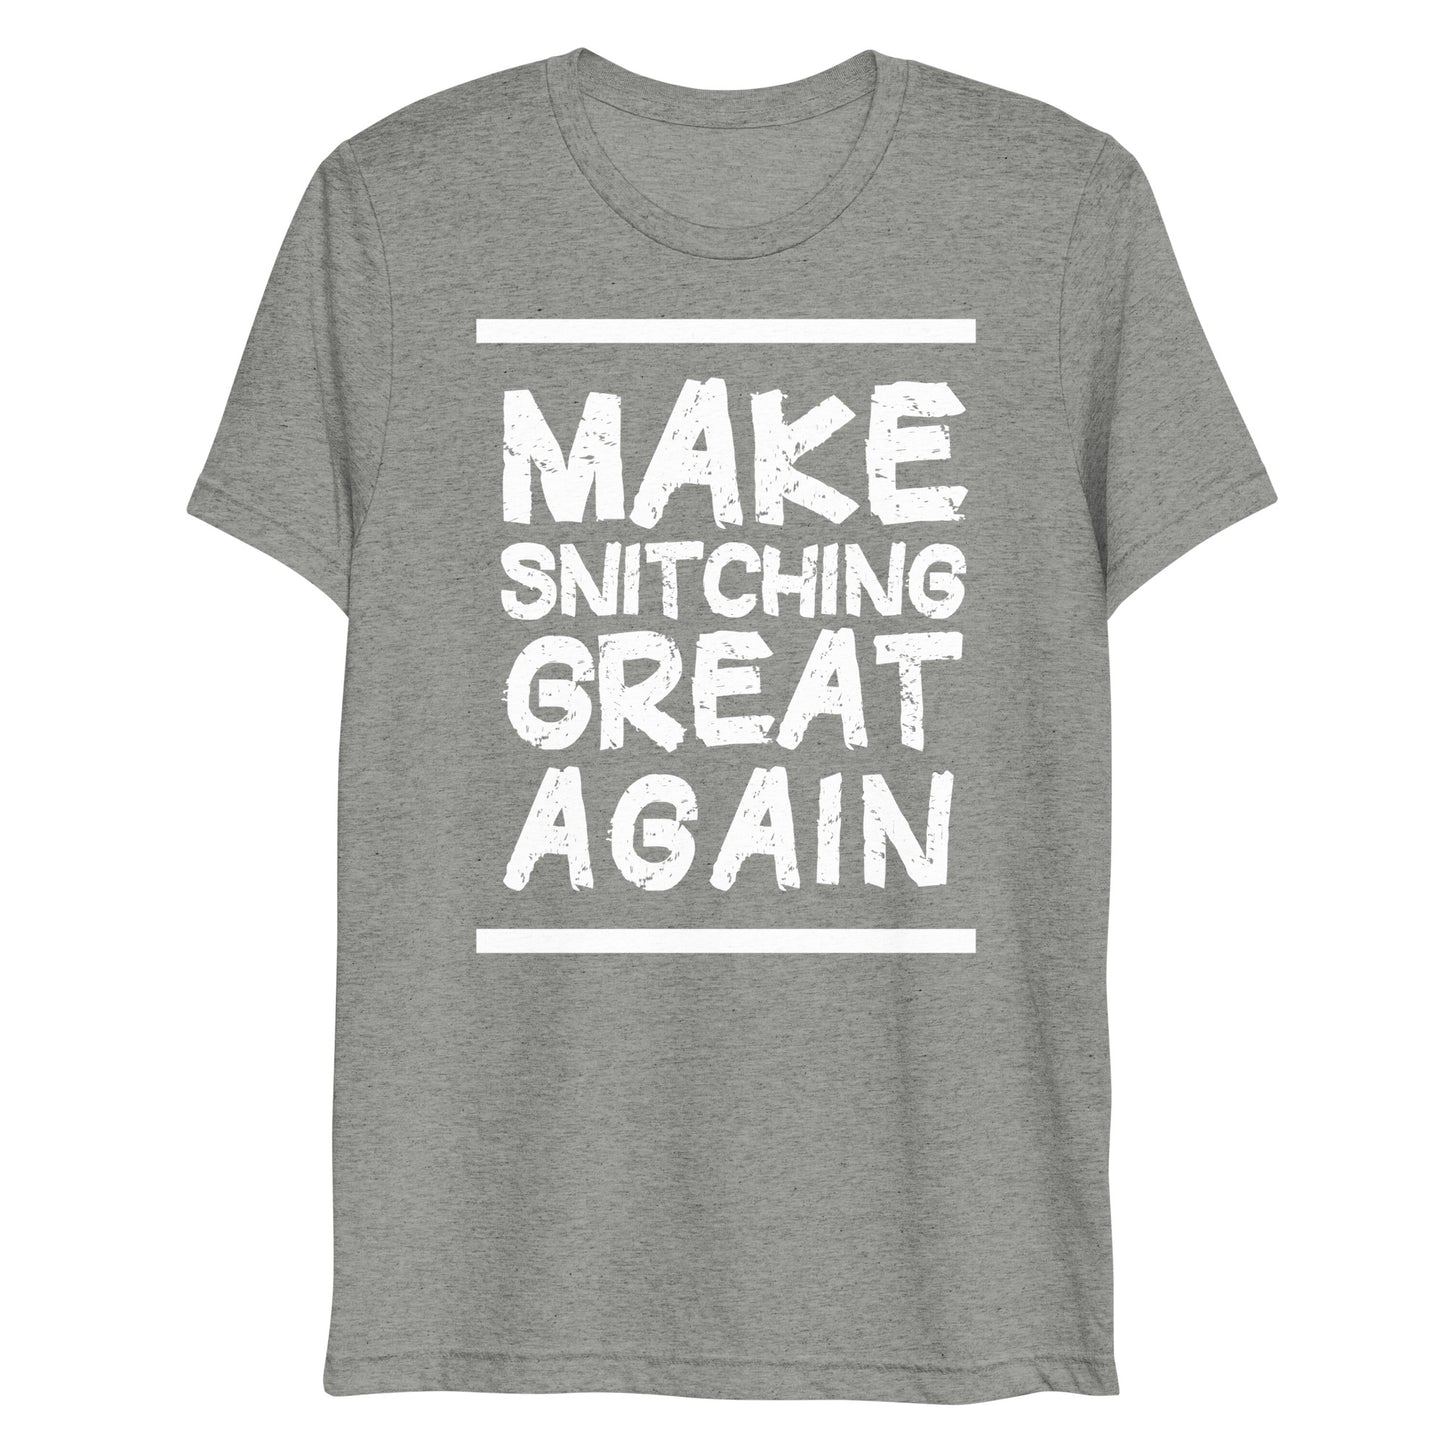 Make Snitching Great Again Motto T-shirt - Make Snitching Great Again